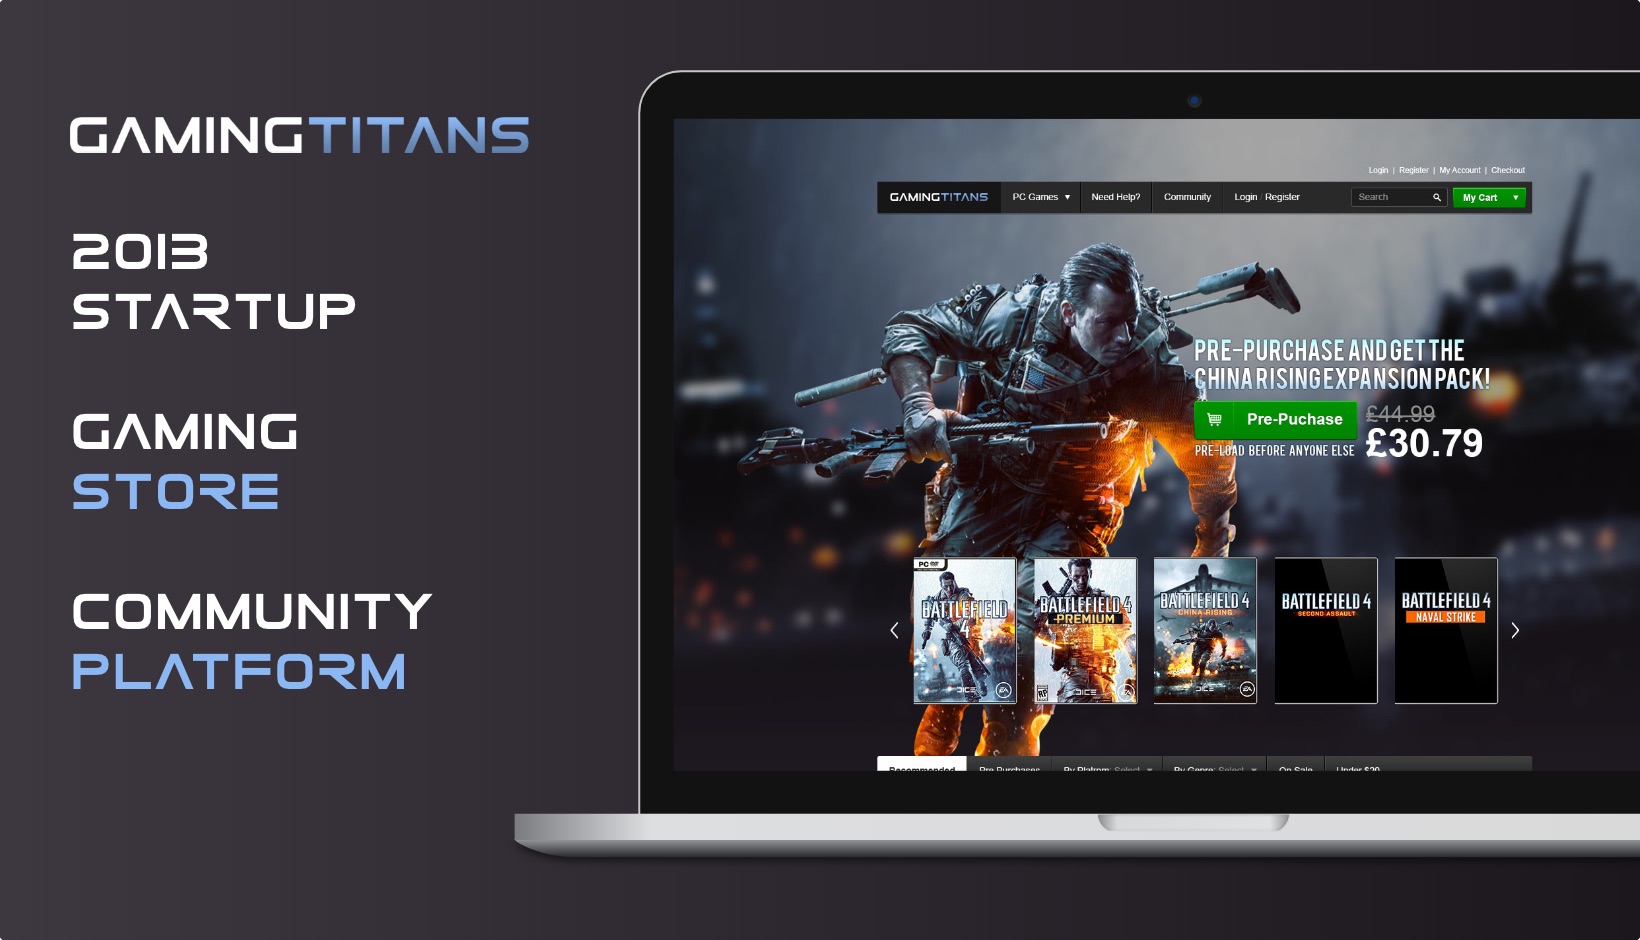 GamingTitans - 2013 startup, gaming store and community platform